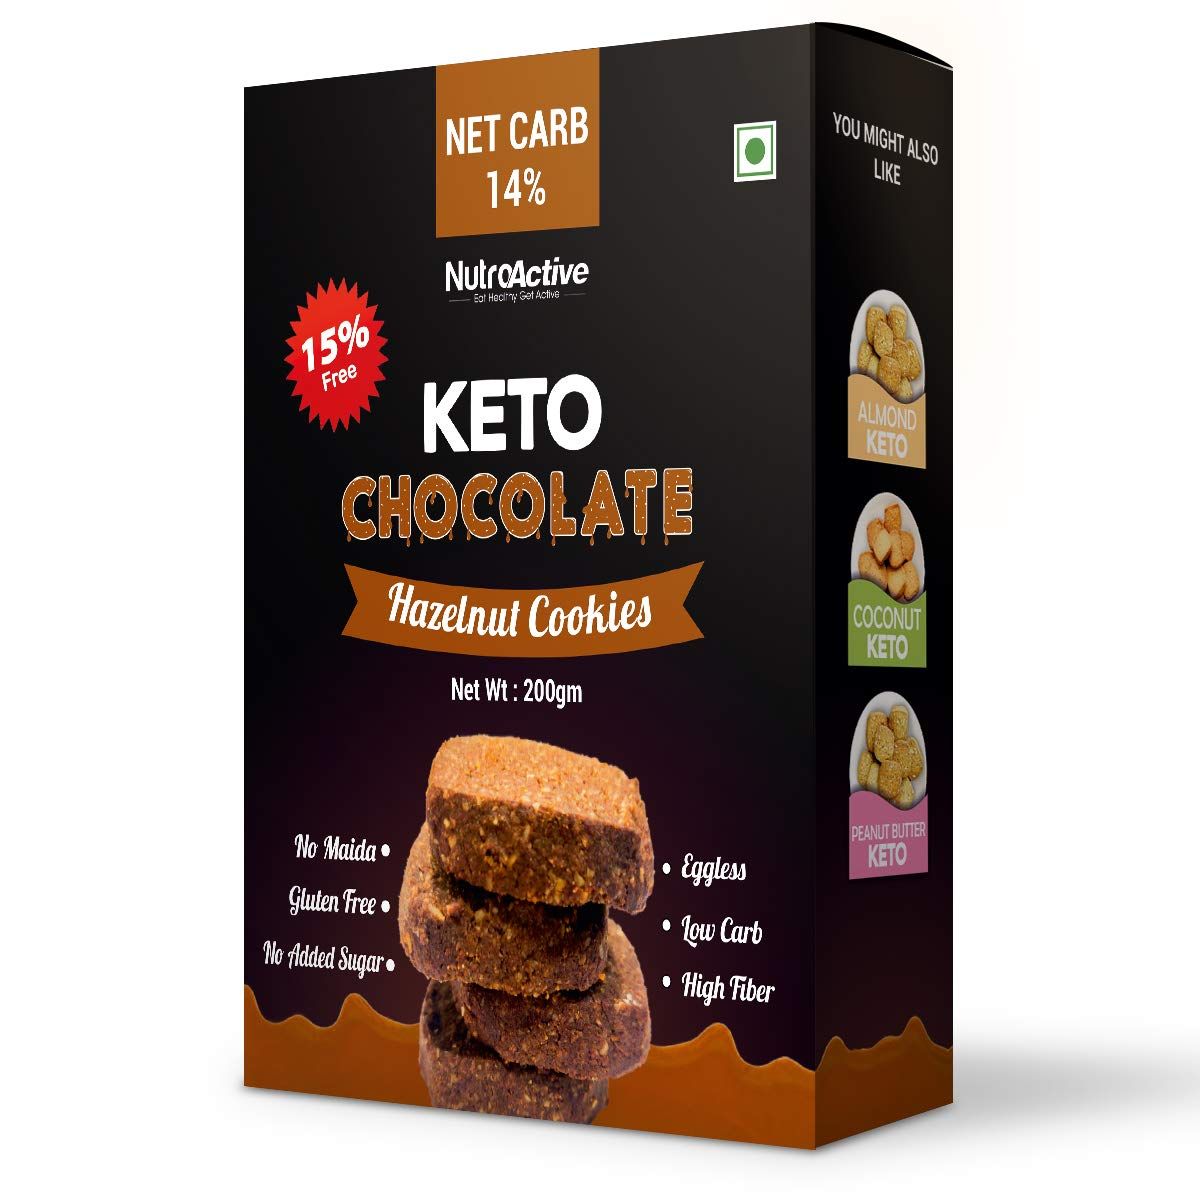 Nutro Active Chocolate Hazelnut Cookies Image